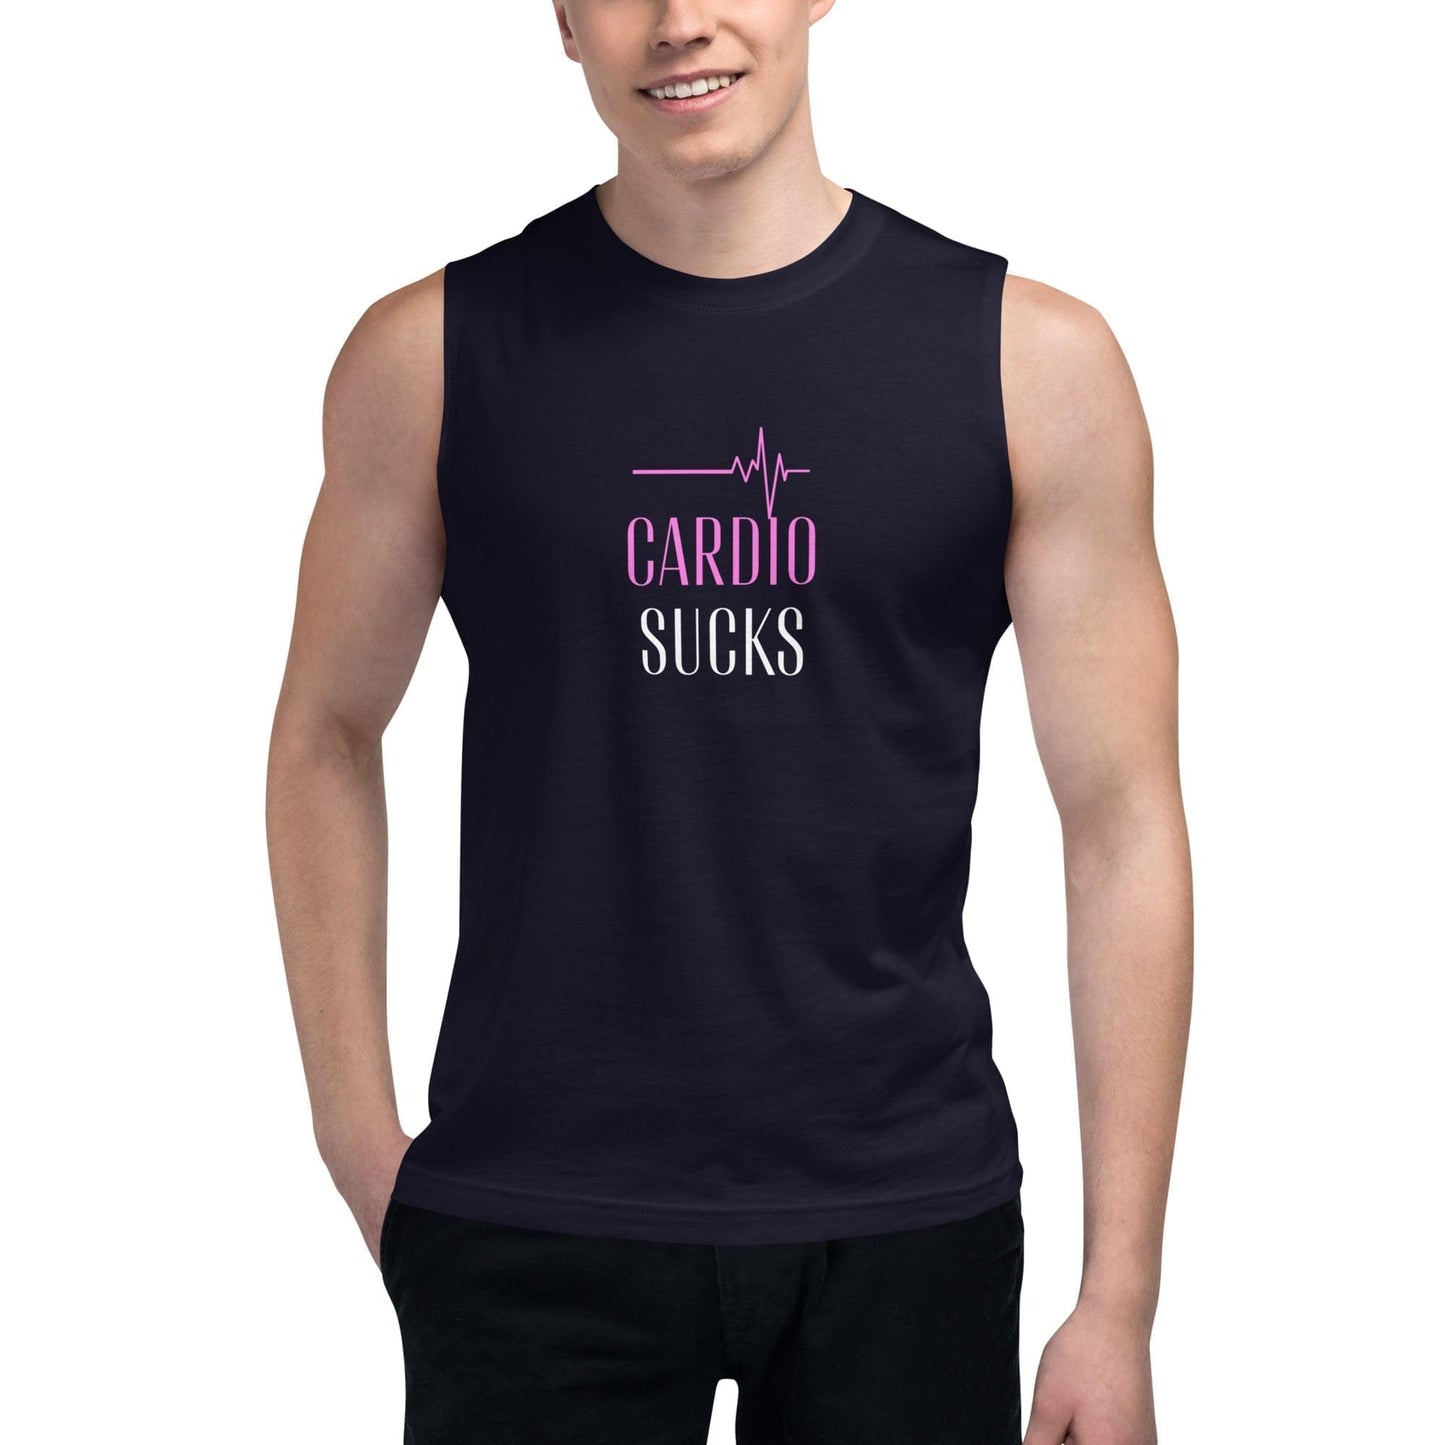 CARDIO SUCKS Muscle Tank-Top